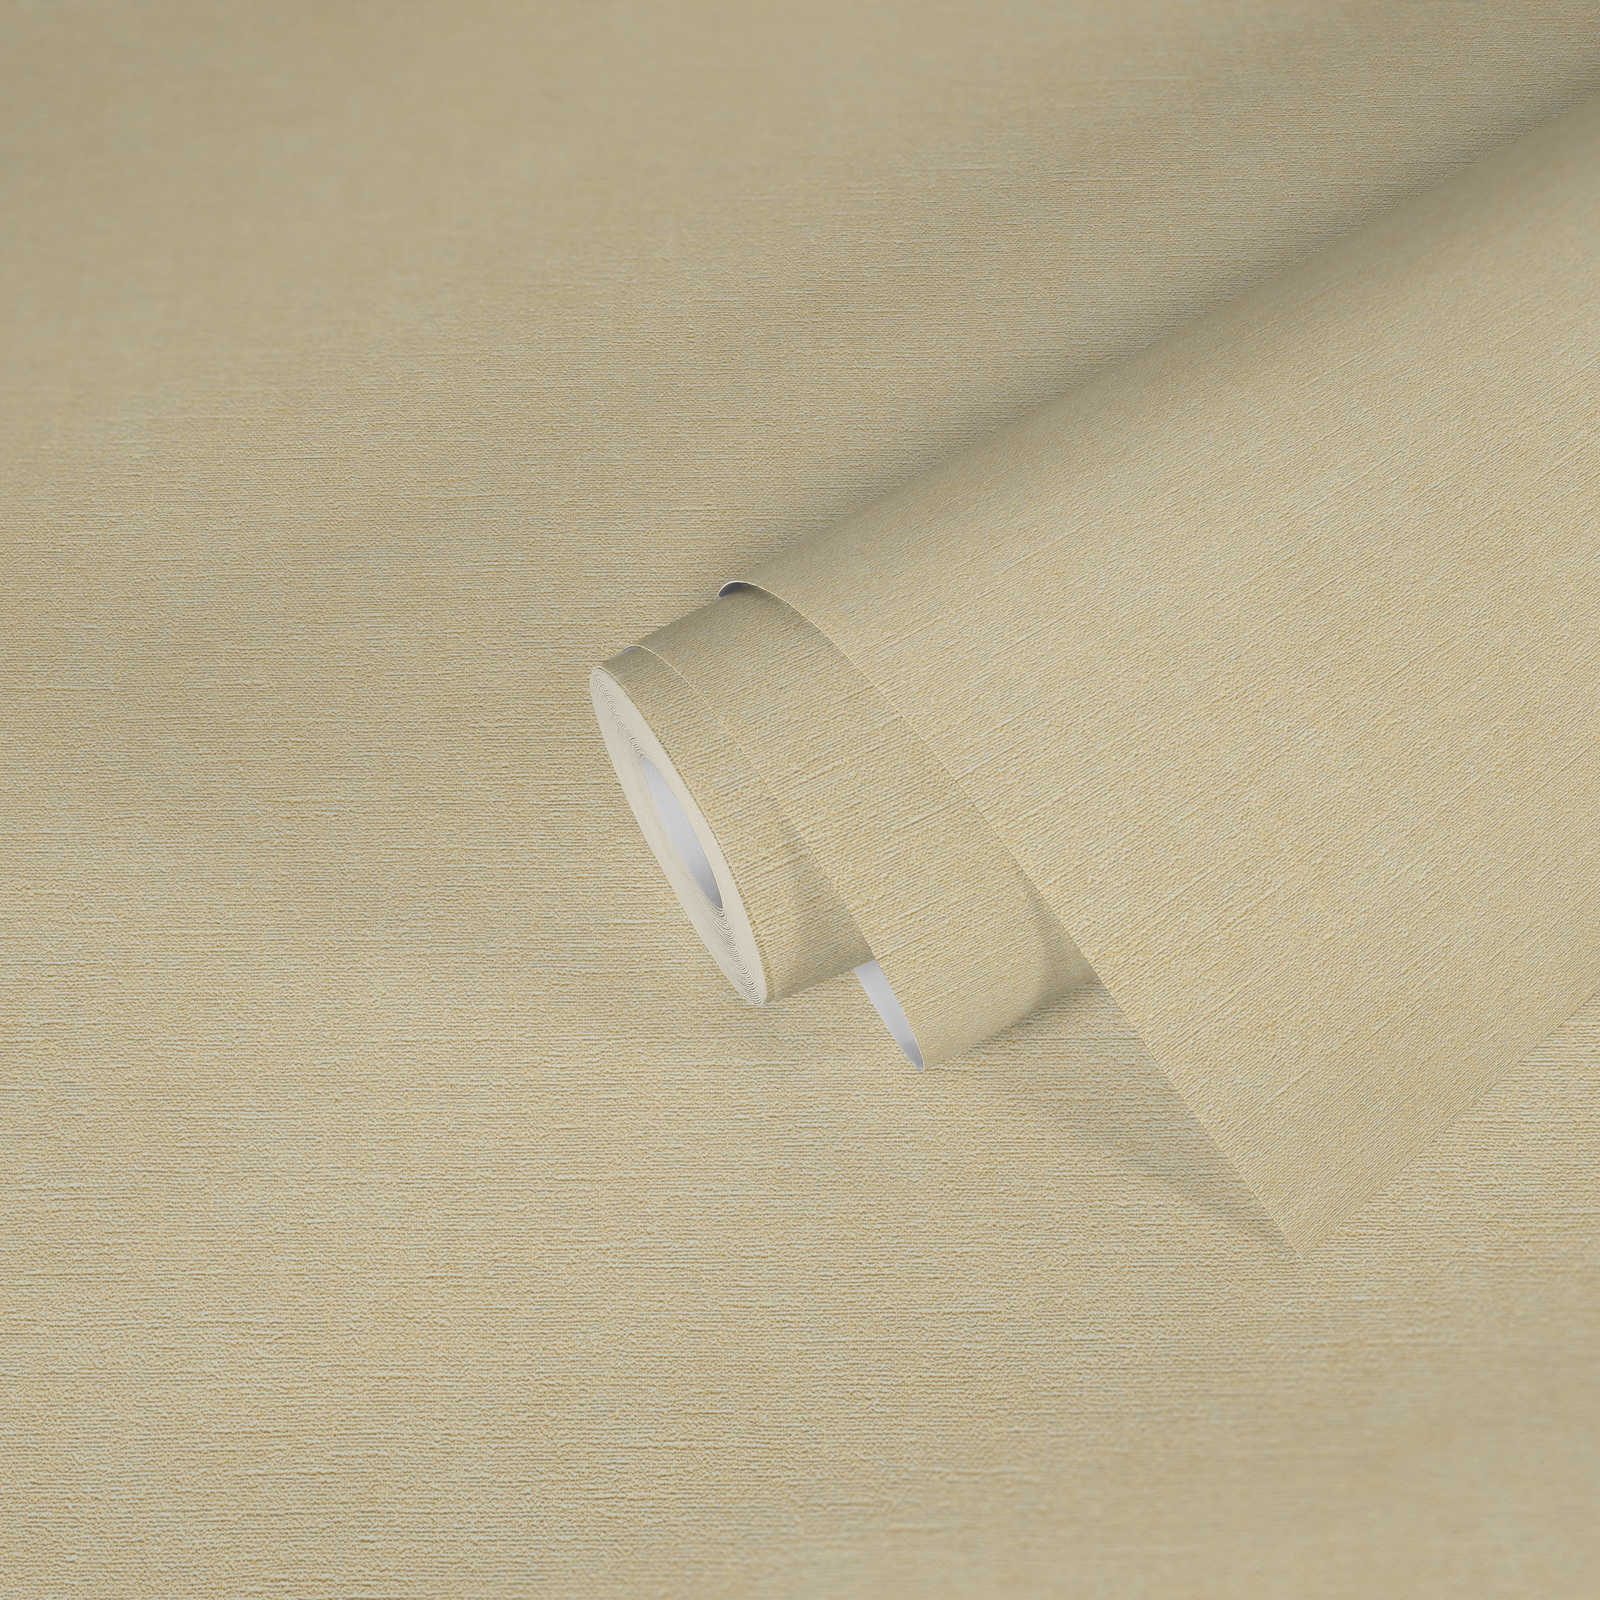             Non-woven wallpaper, single-coloured, textile look - beige
        